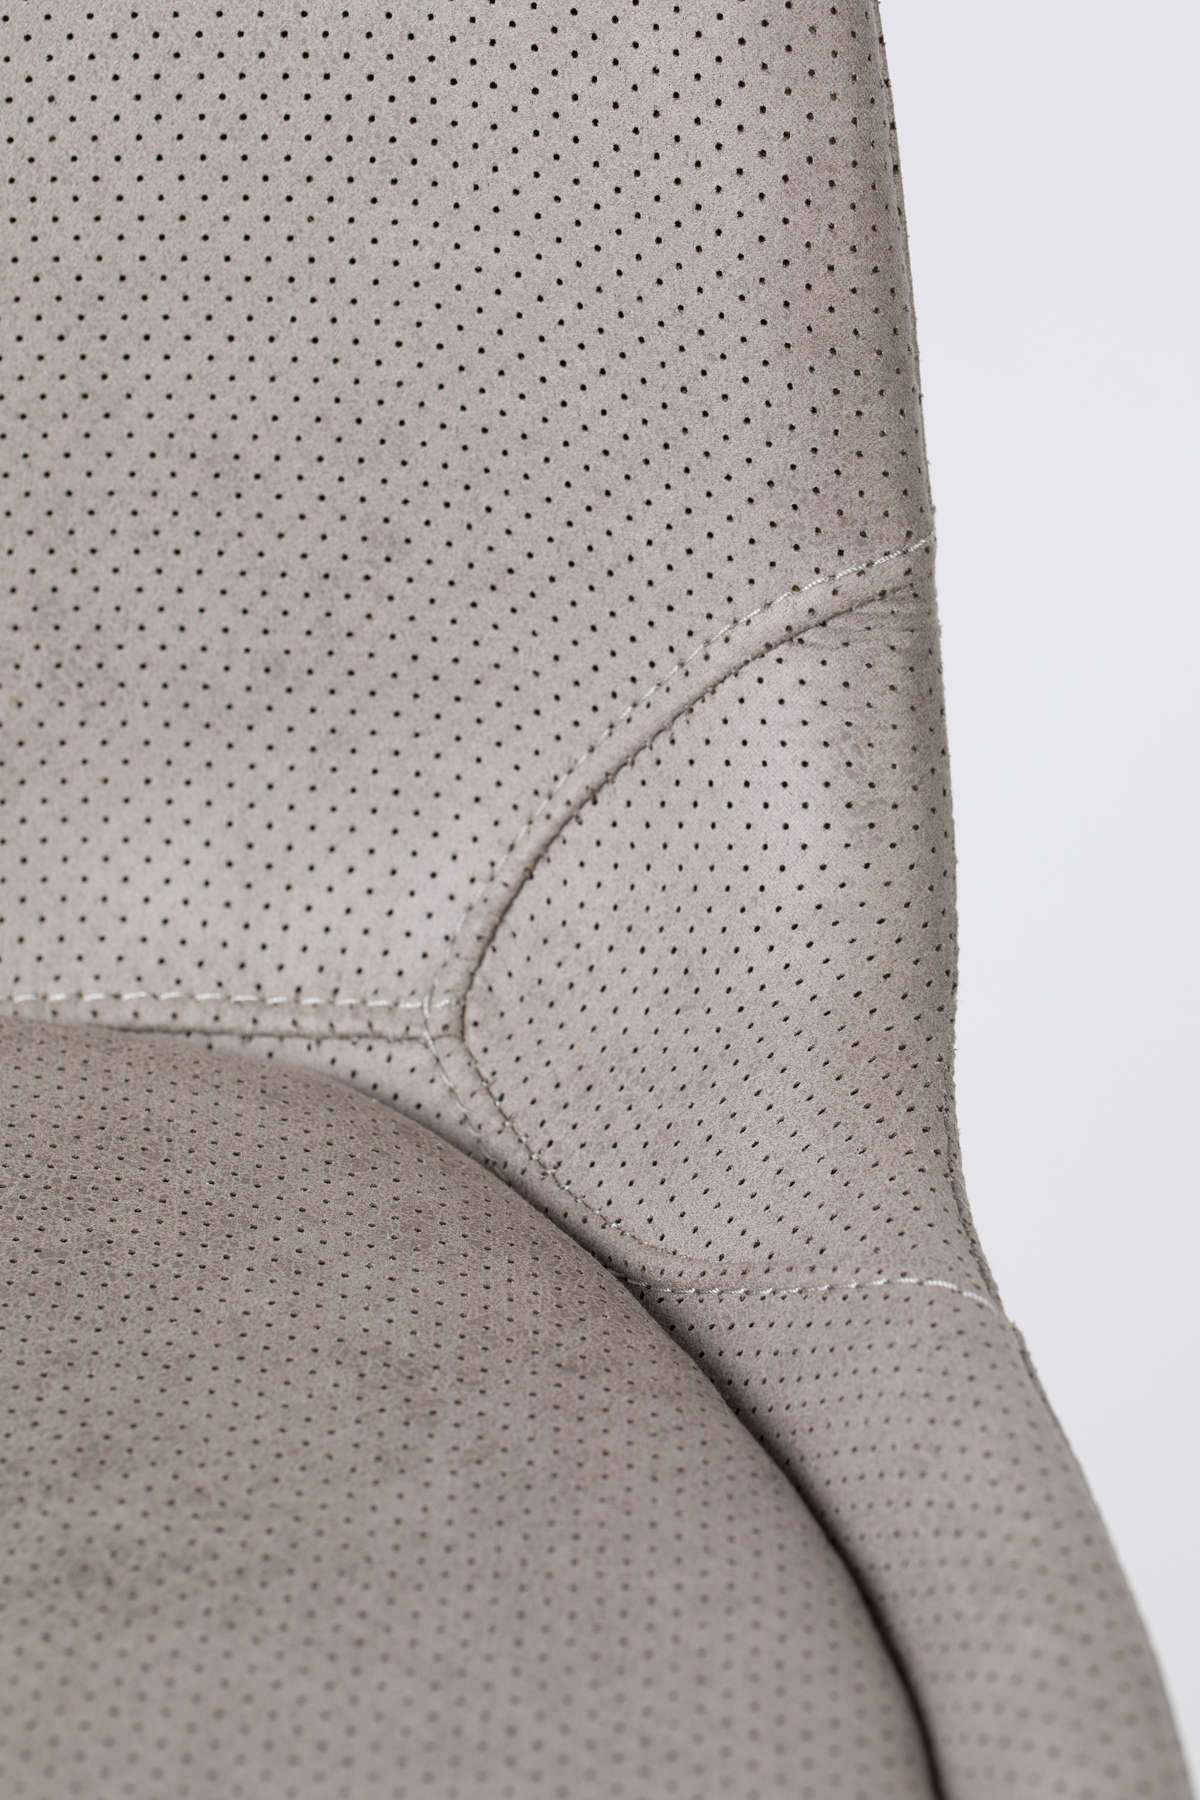 BRENT AIR chair grey, Zuiver, Eye on Design